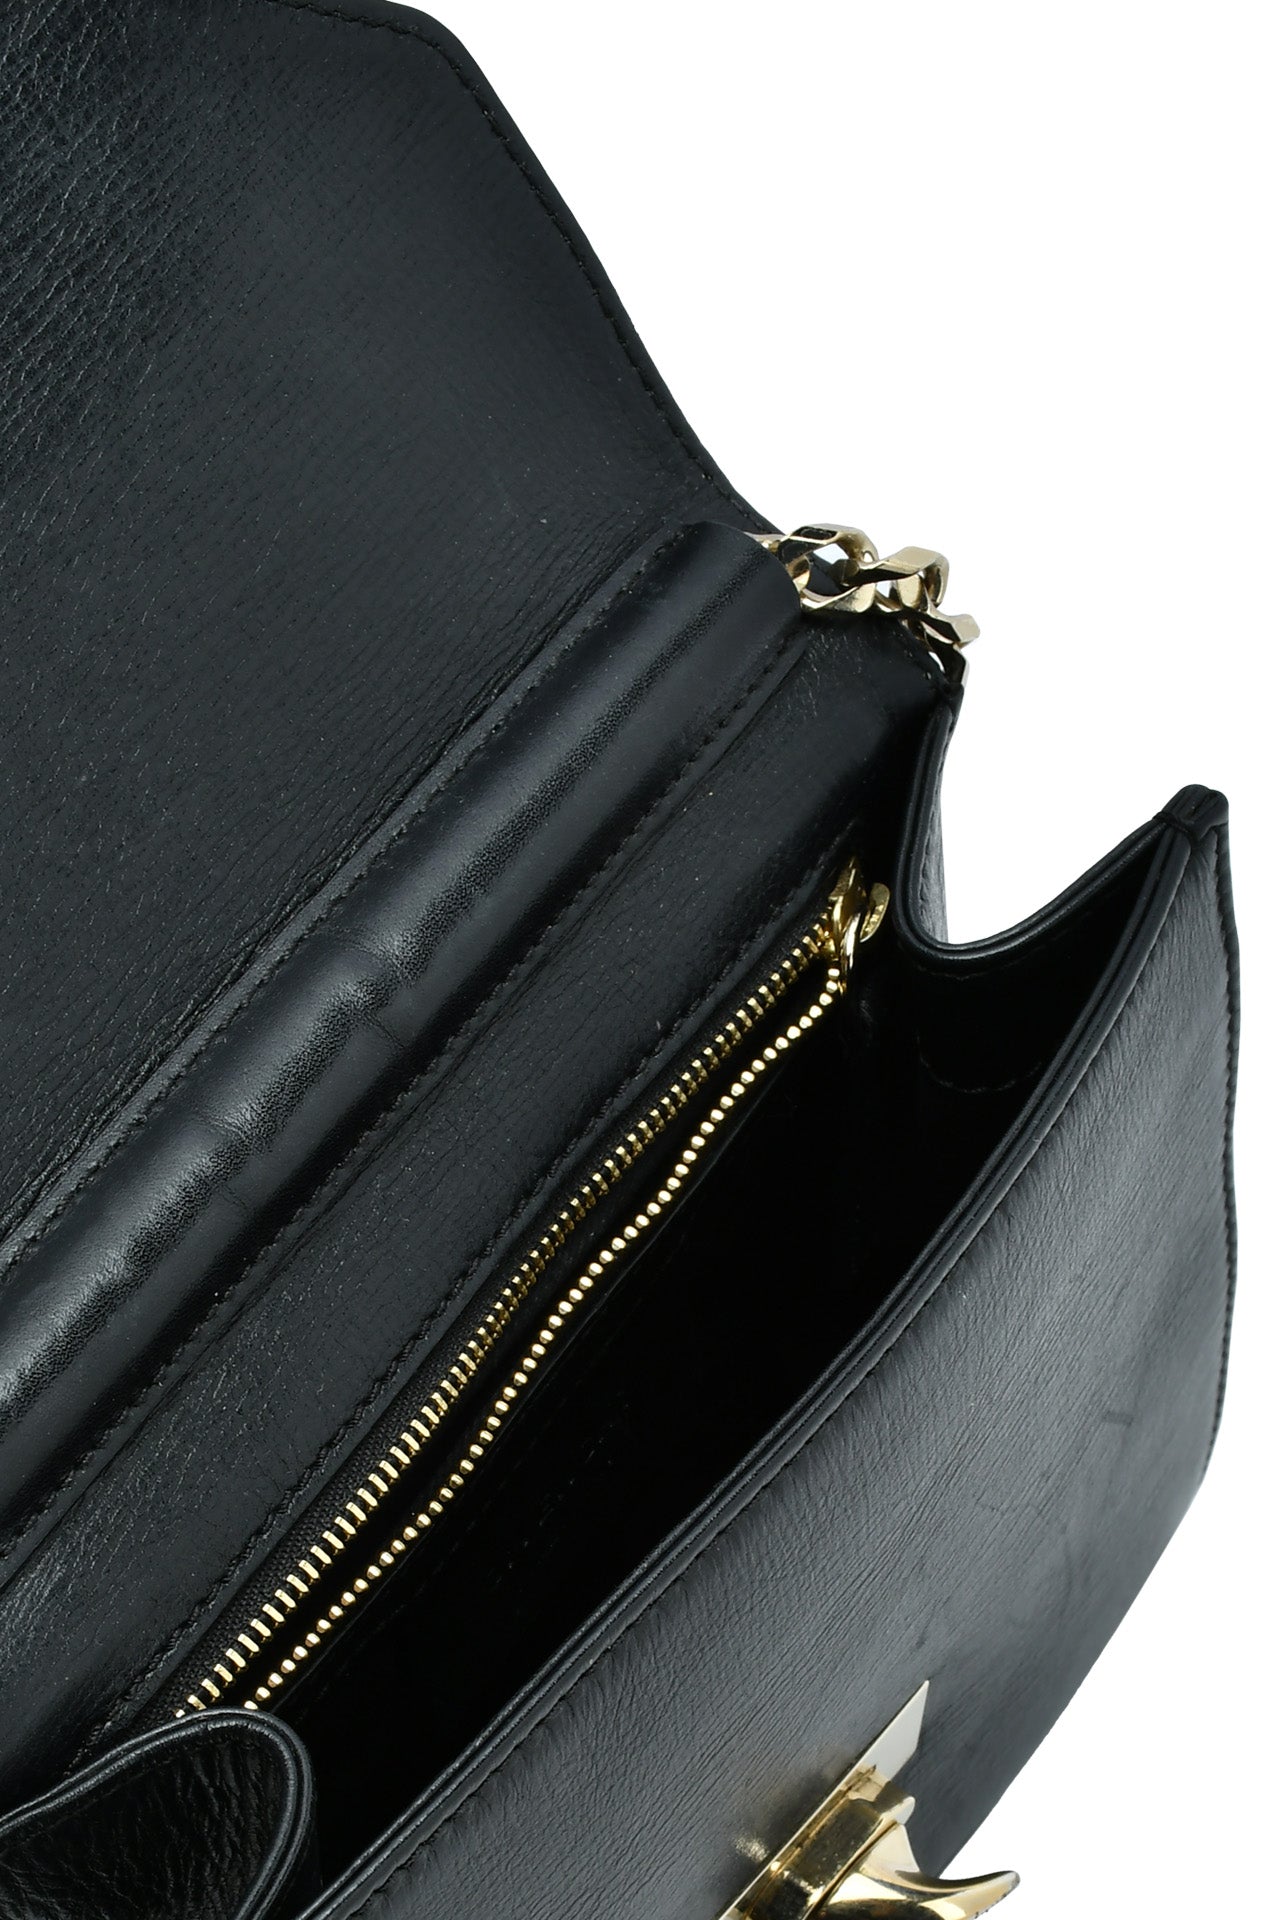 Givenchy Shark Flap Black Leather Cross Body Bag